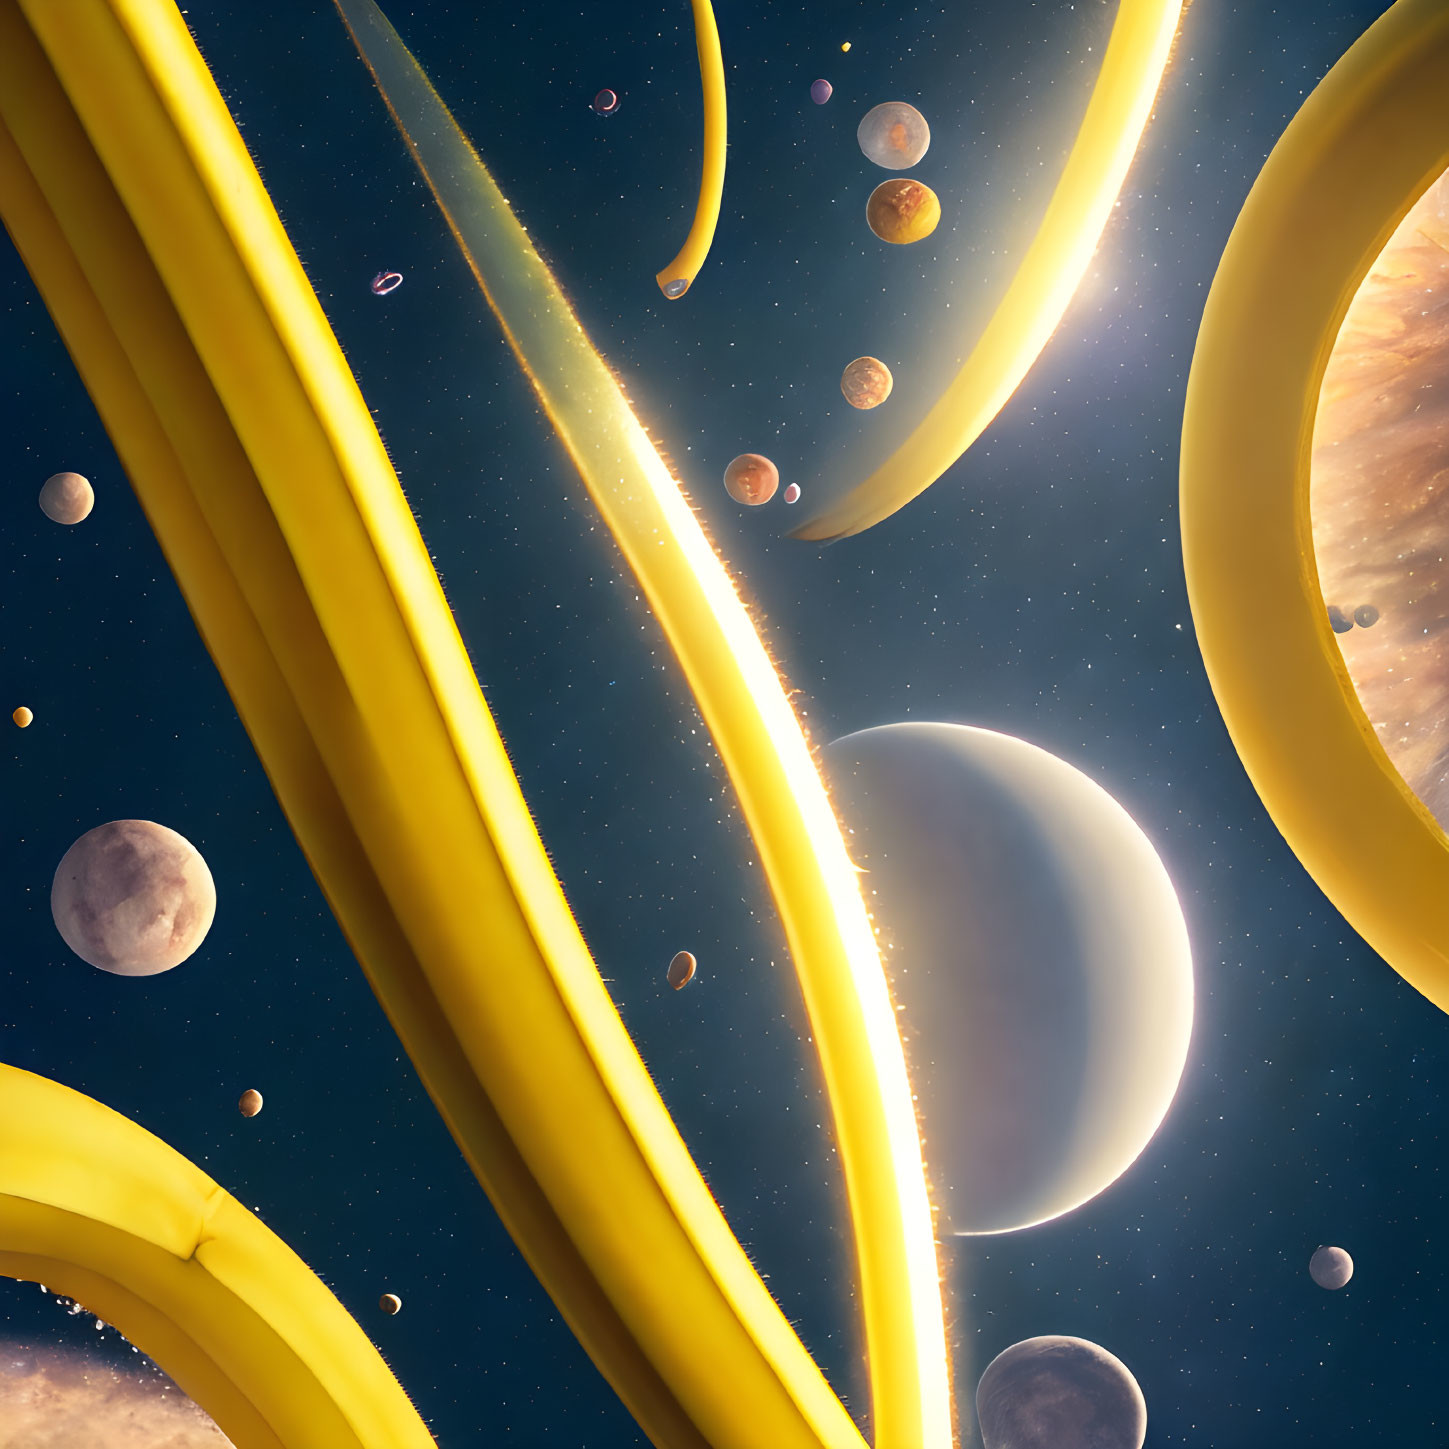 Giant bananas orbit planets in whimsical space scene